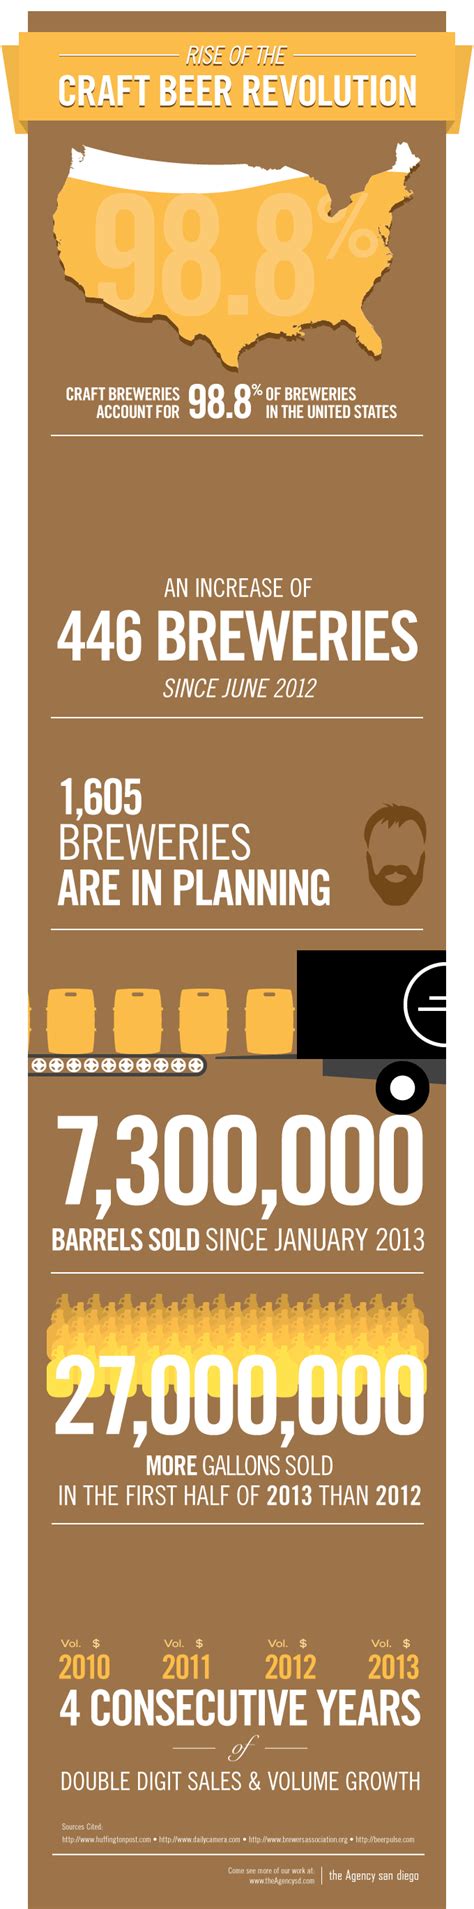 Animated Craft Beer Infographic | Beer infographic, Craft beer, Beer